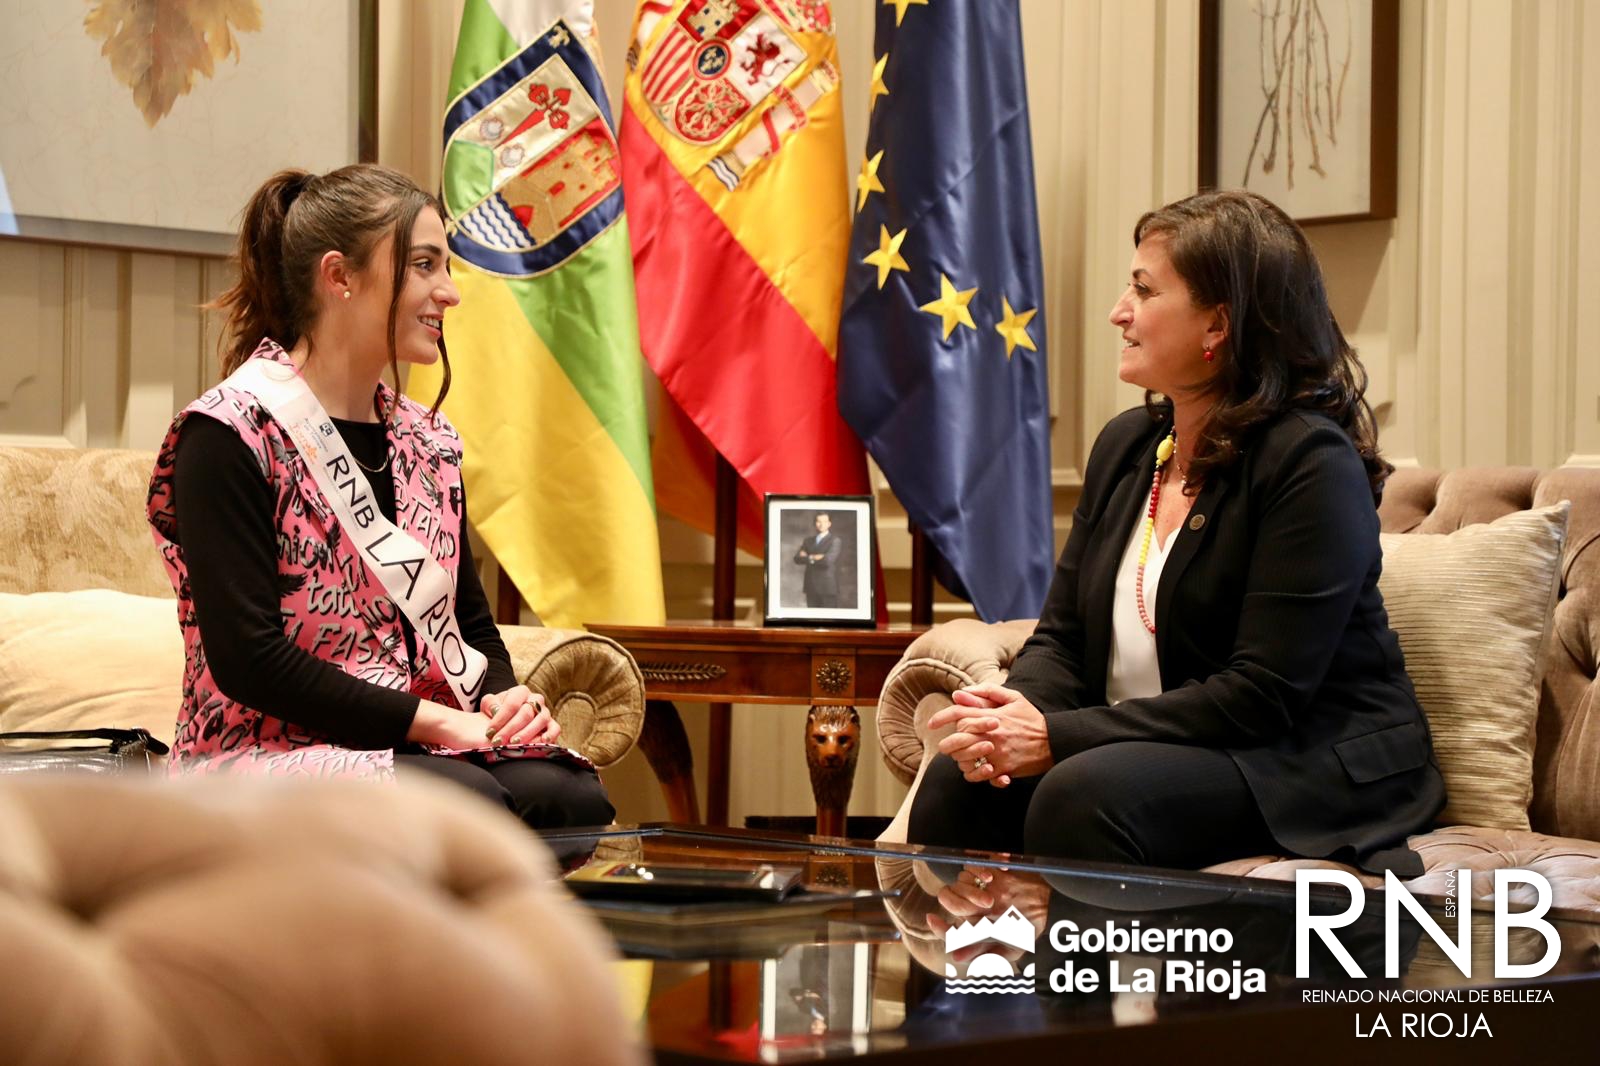 Cristina Saseta Miss RNB La Rioja 2022 Concha Andreu Presidenta Gobierno La Rioja 1